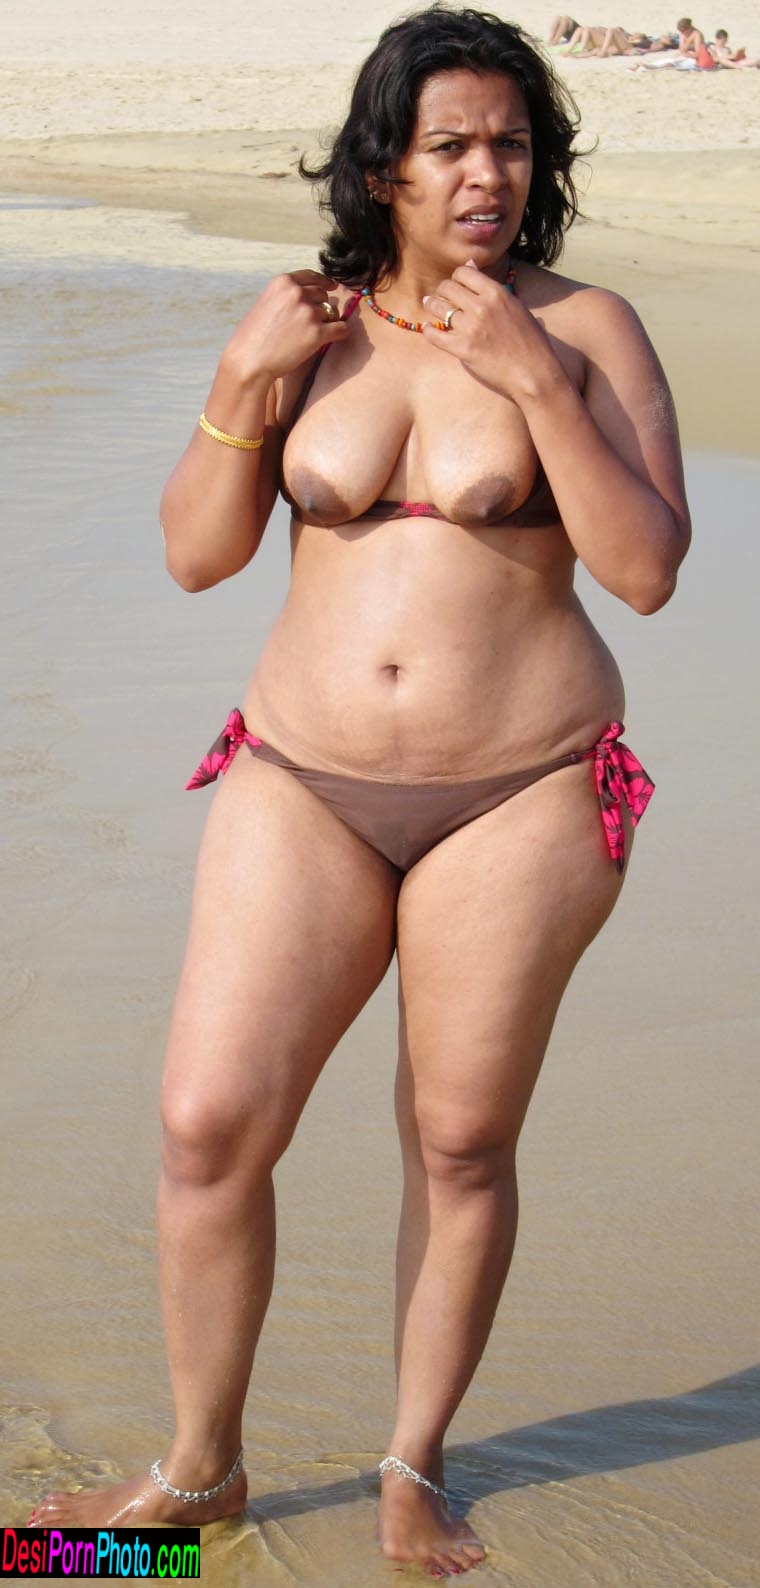 Desi bhabhi nude body in saree